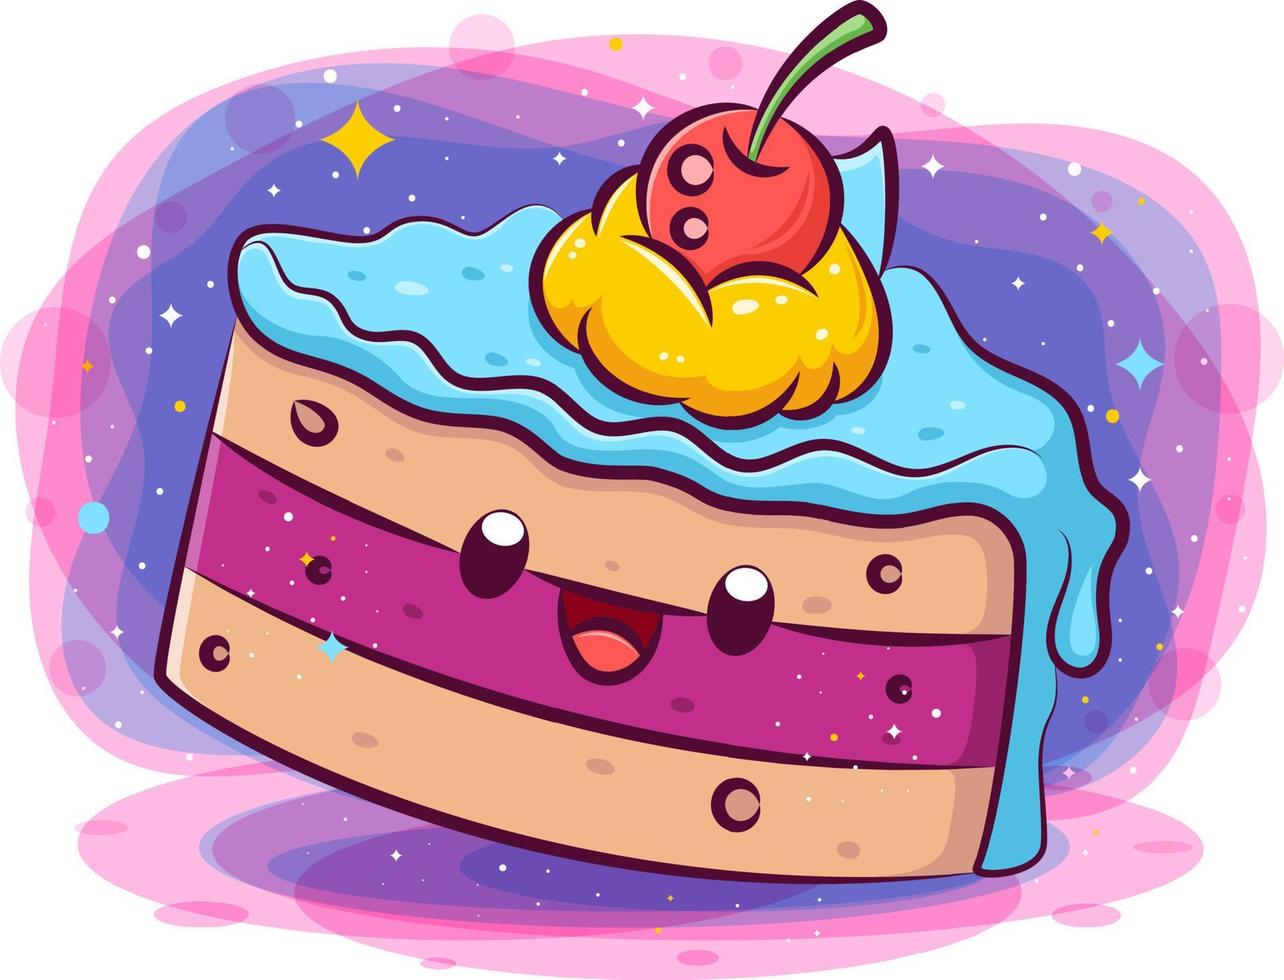 Smiling cute kawaii cartoon of cake character vector